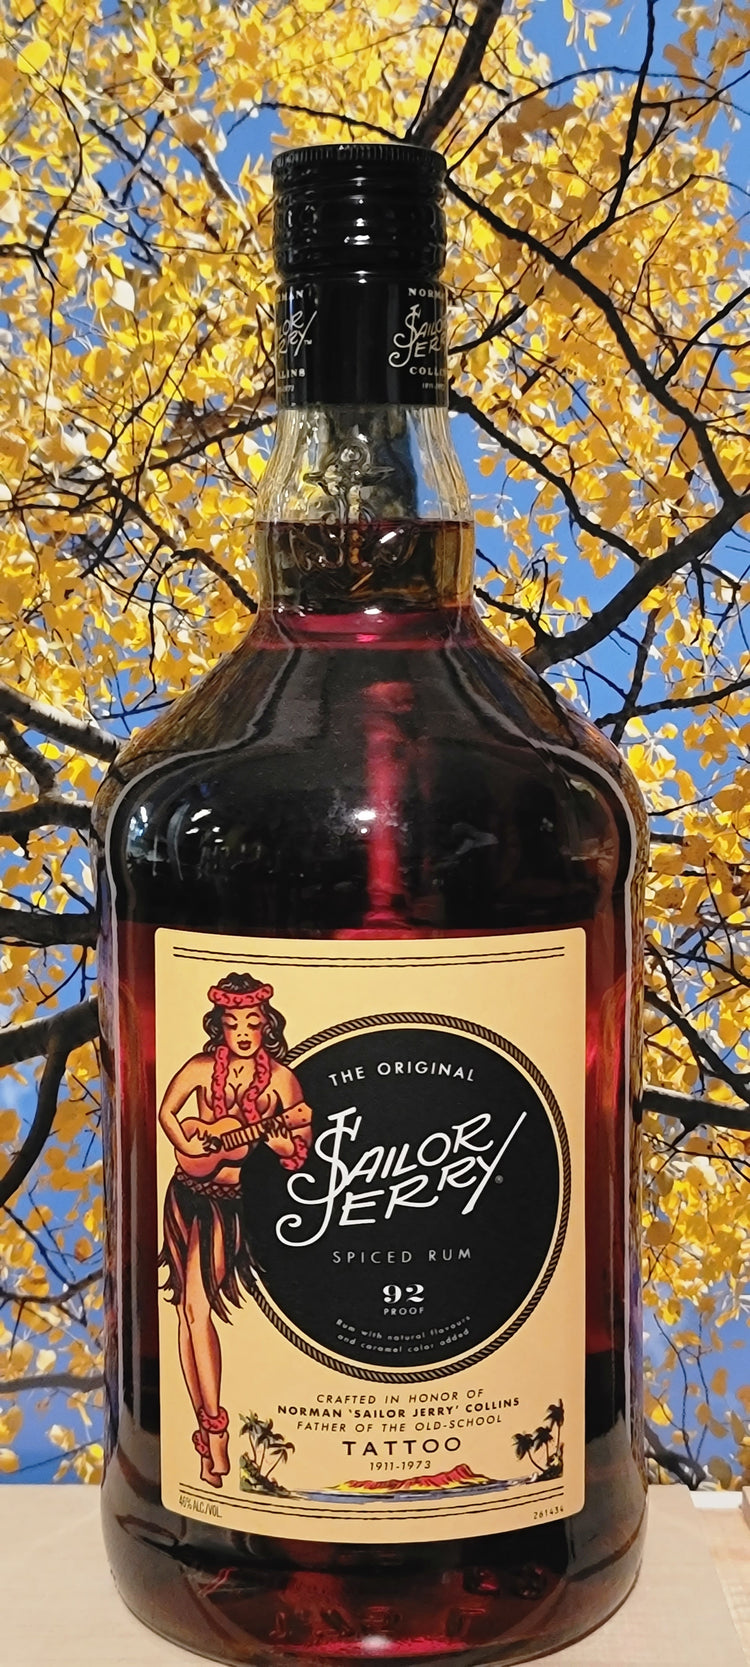 Sailor jerry spiced rum